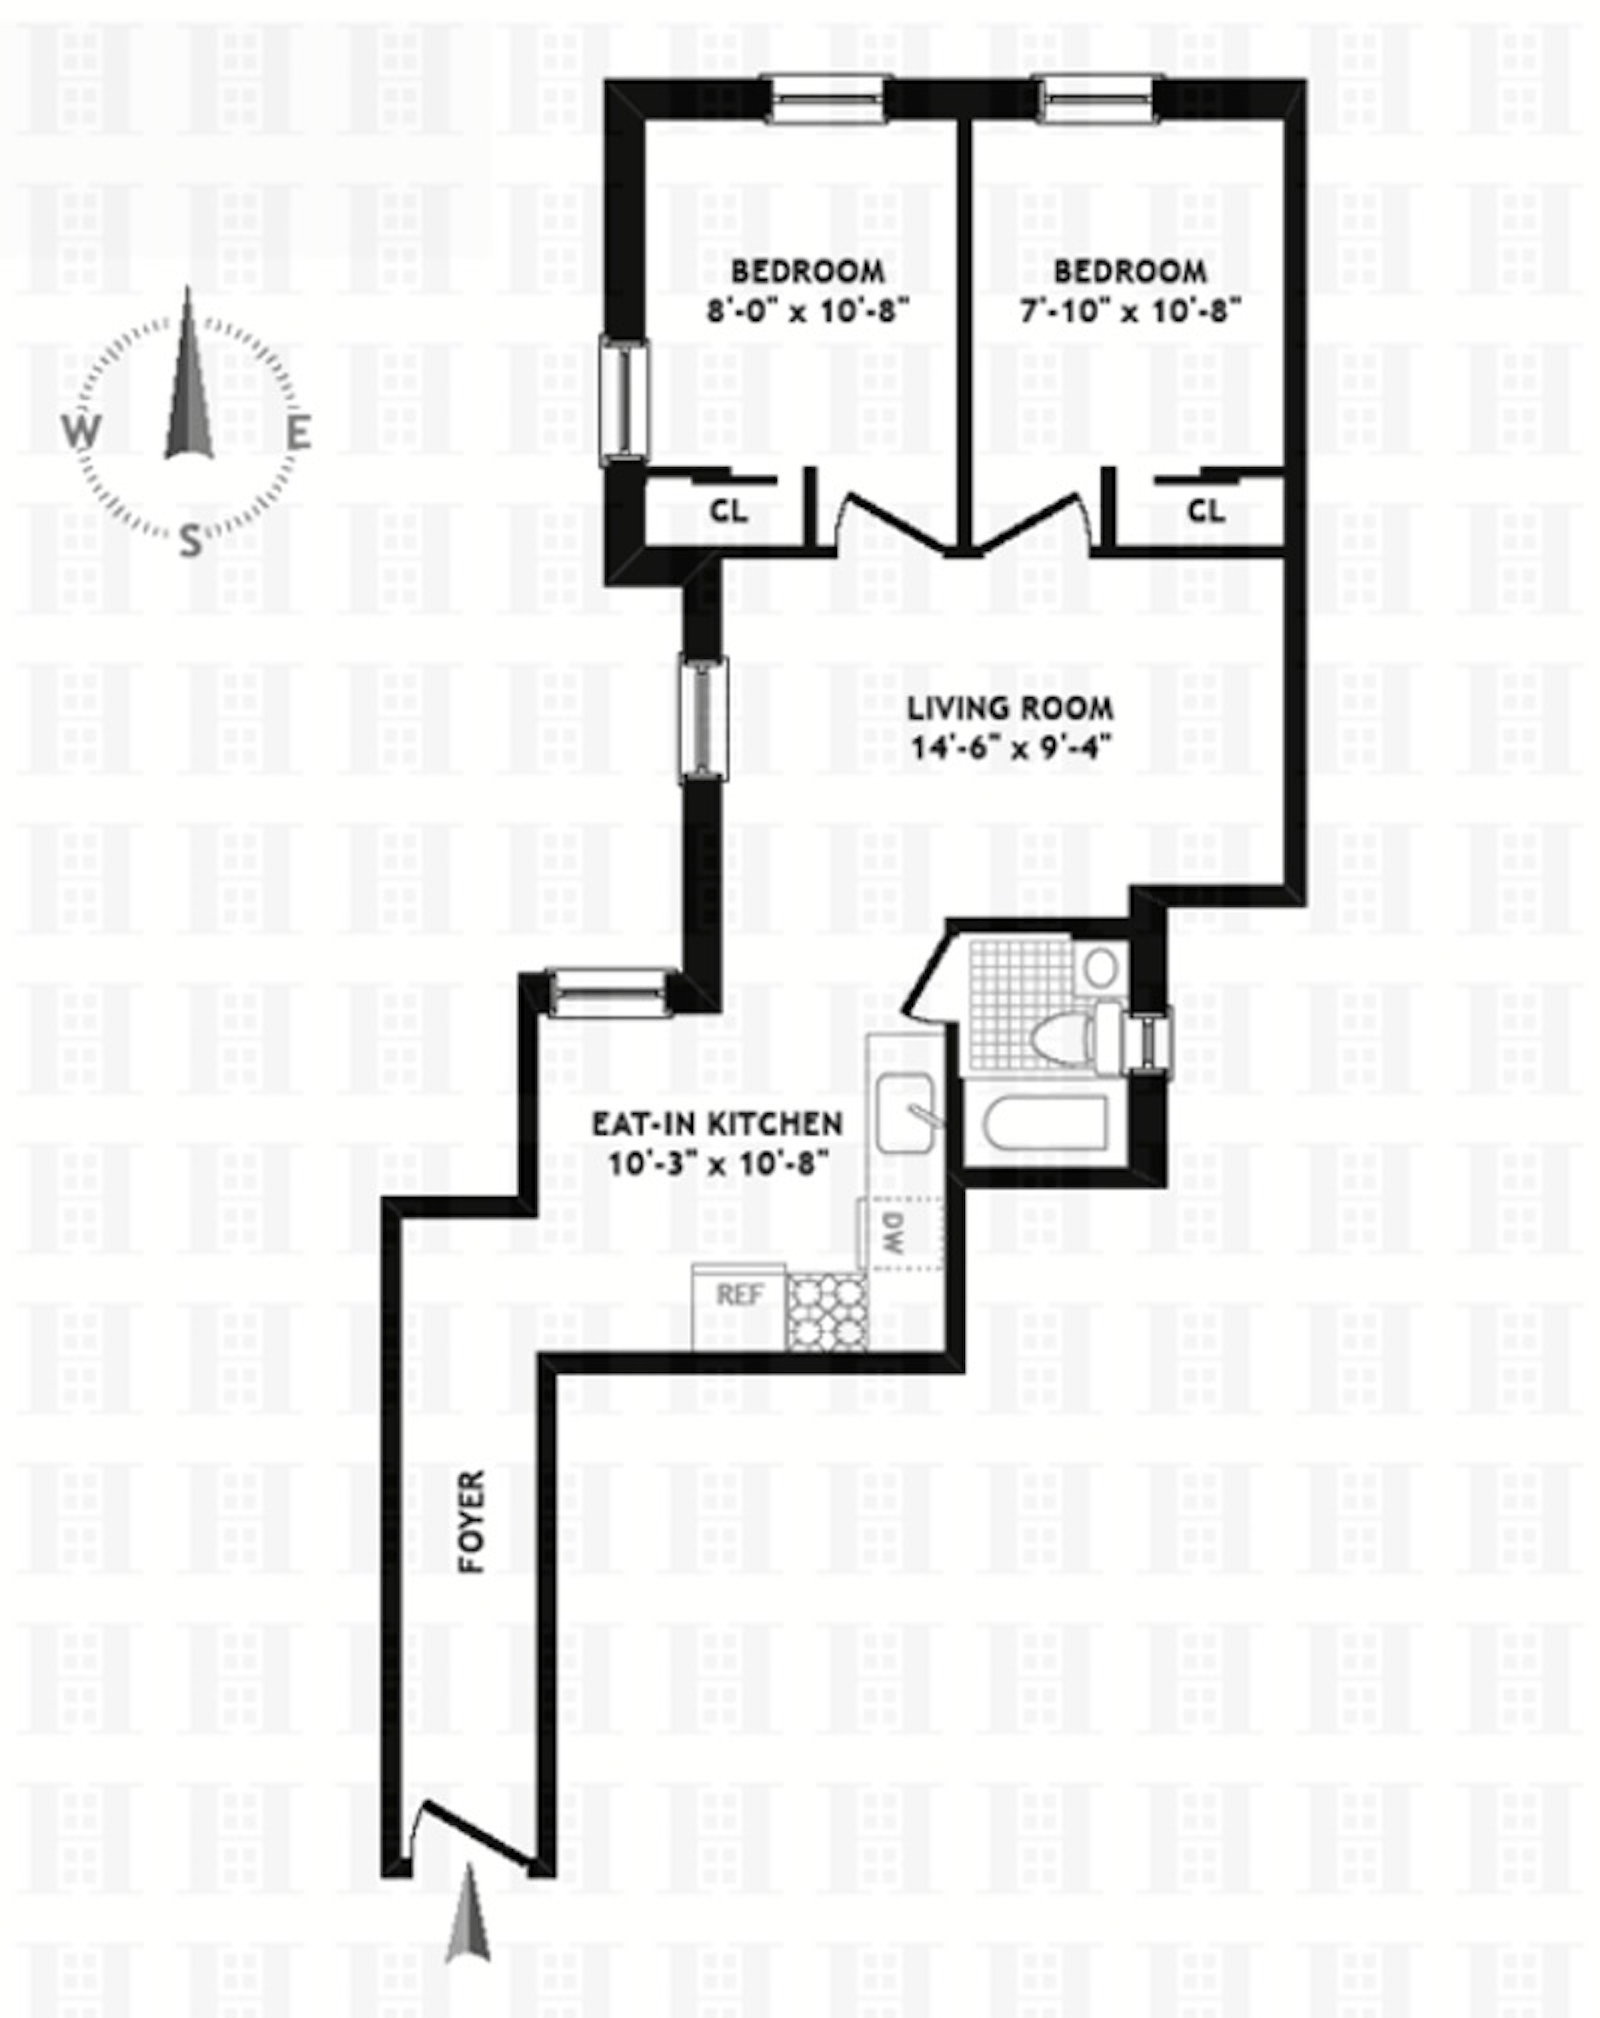 Floorplan for 199 Prince Street, 22